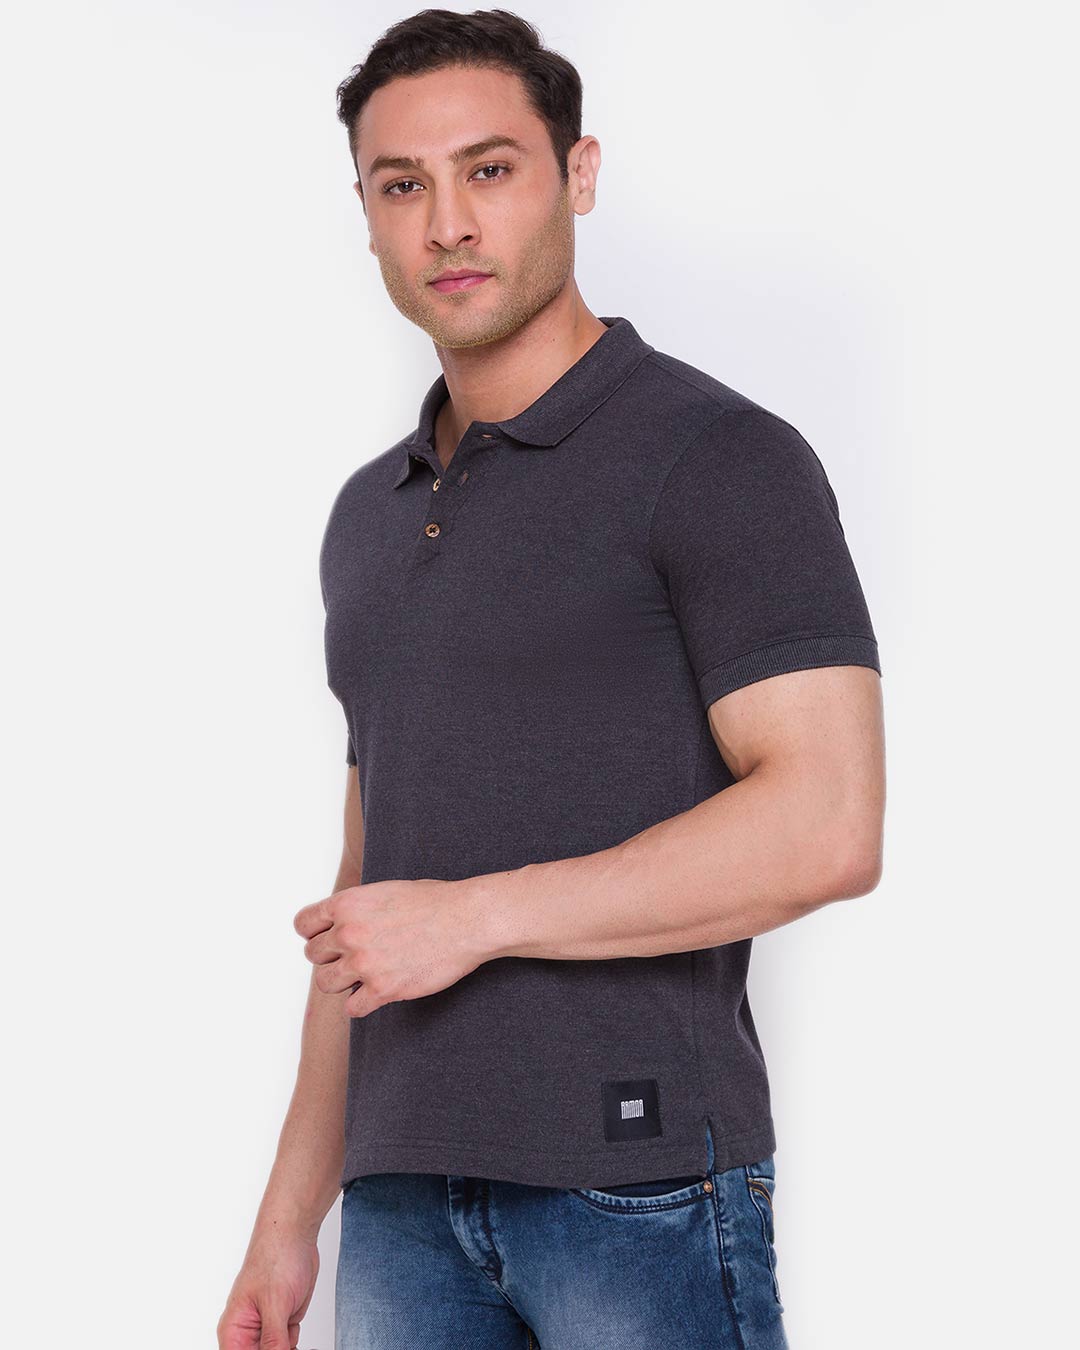 Shop Inc. Men's Armor Polo T-Shirt Charcoal-Back